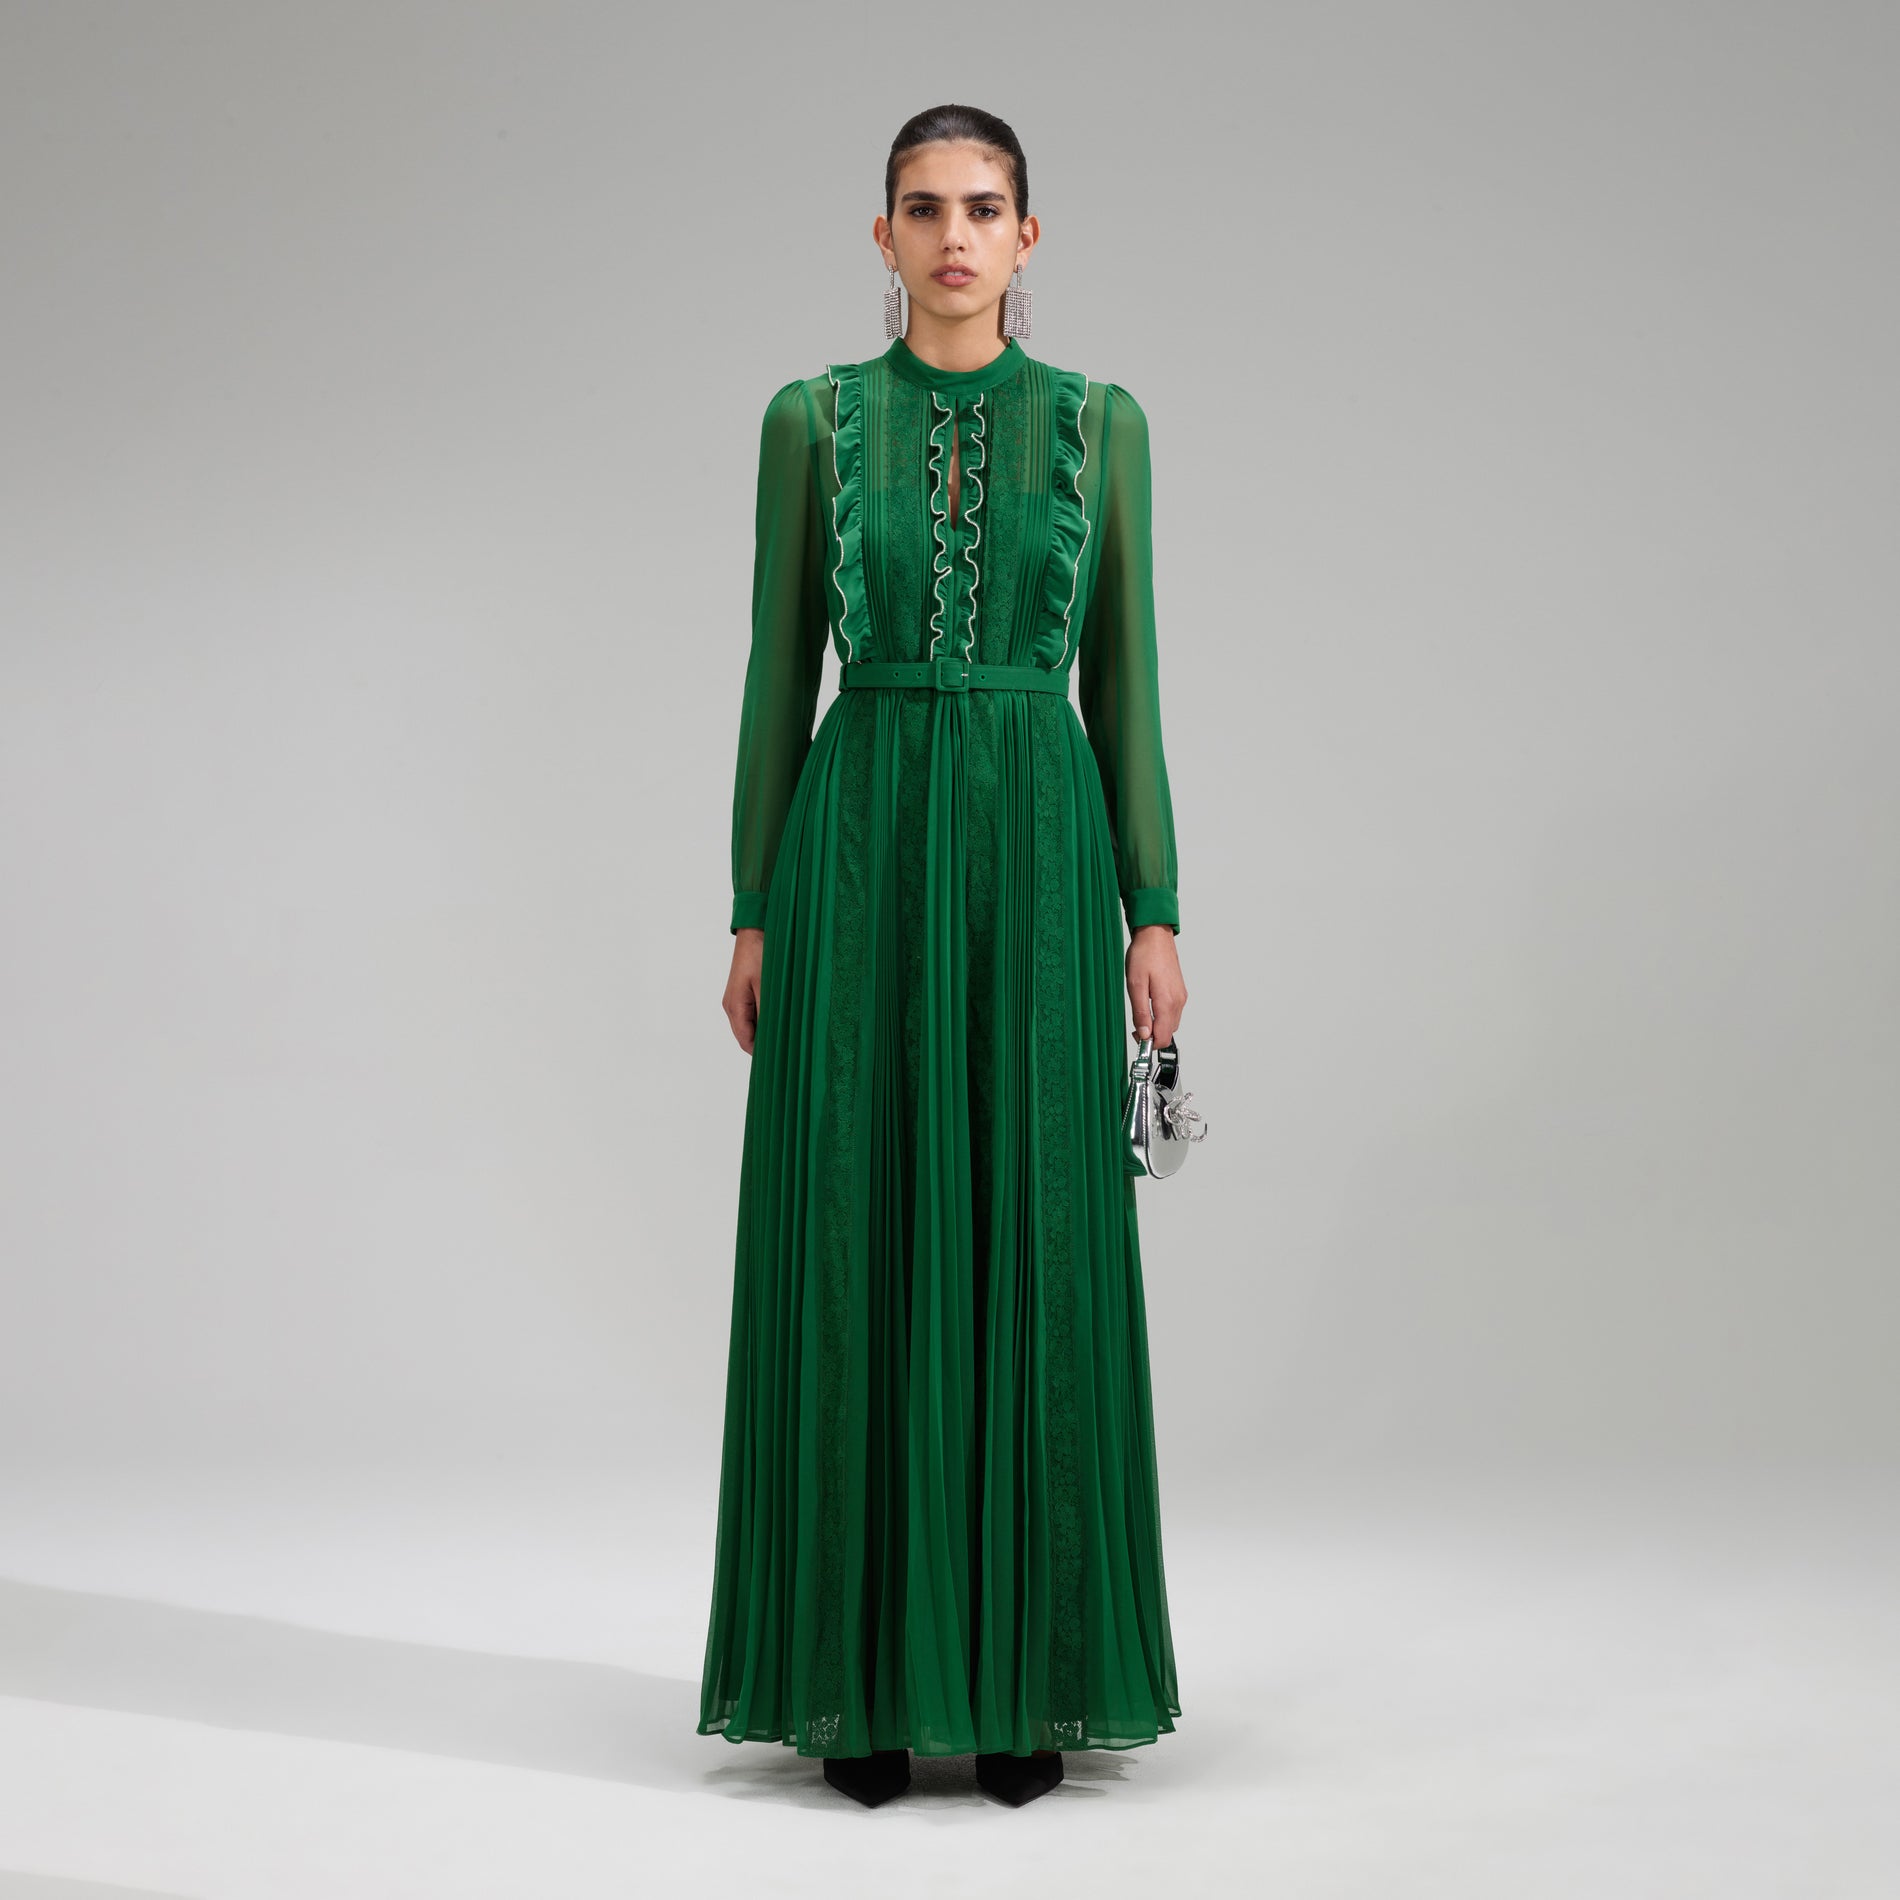 A woman wearing the Green Pleated Rhinestone Detail Maxi Dress